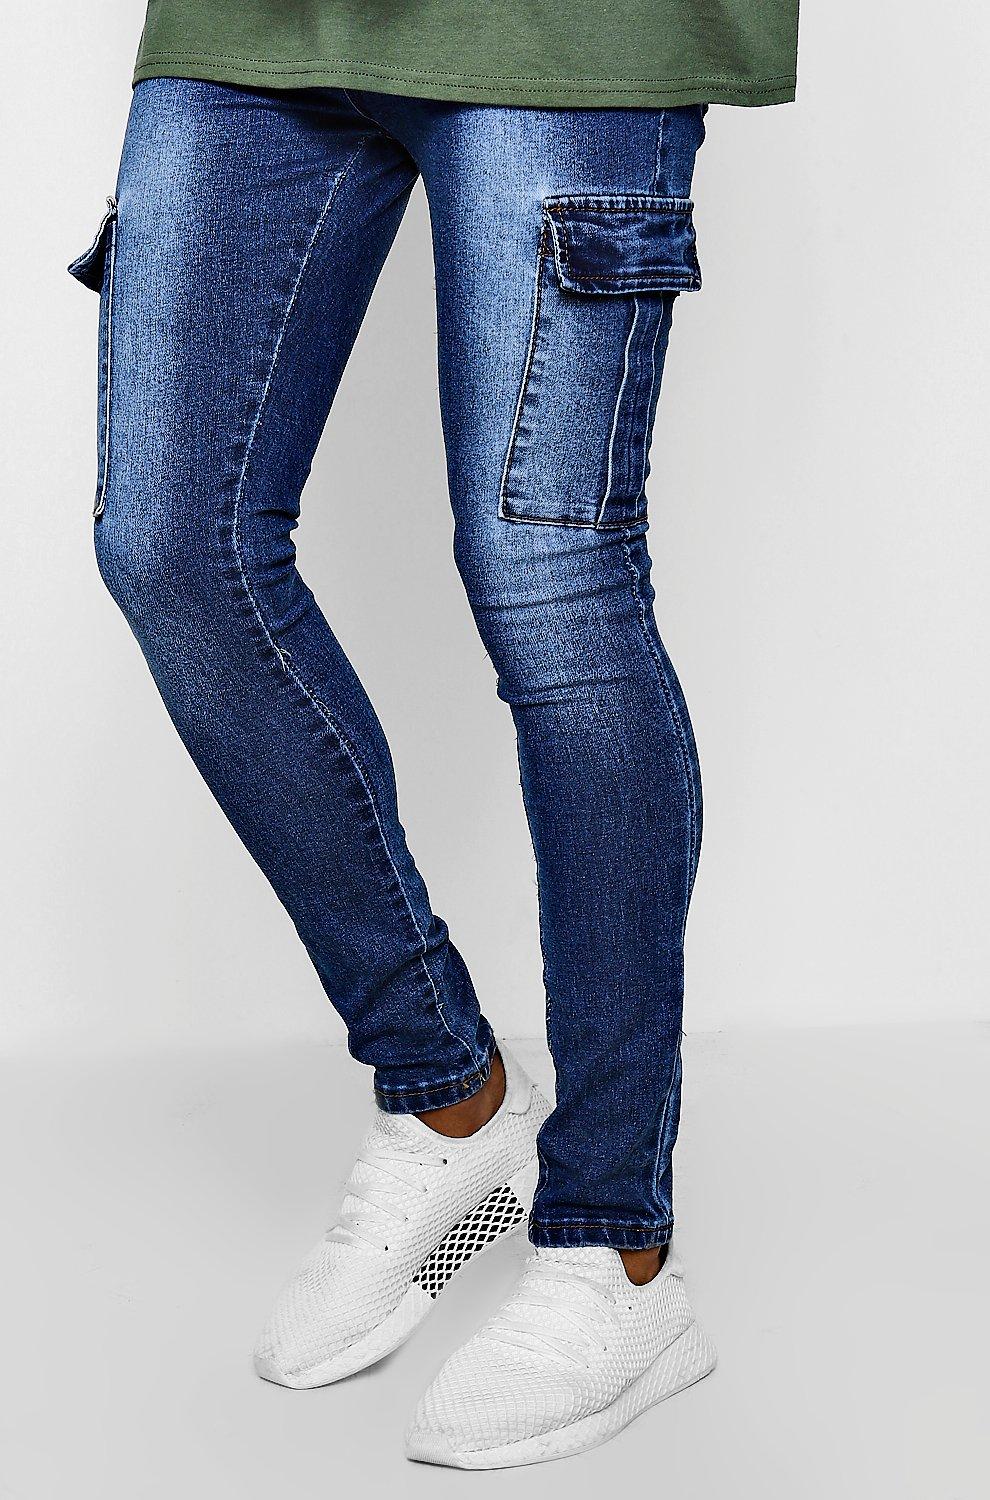 cargo pocket jeans